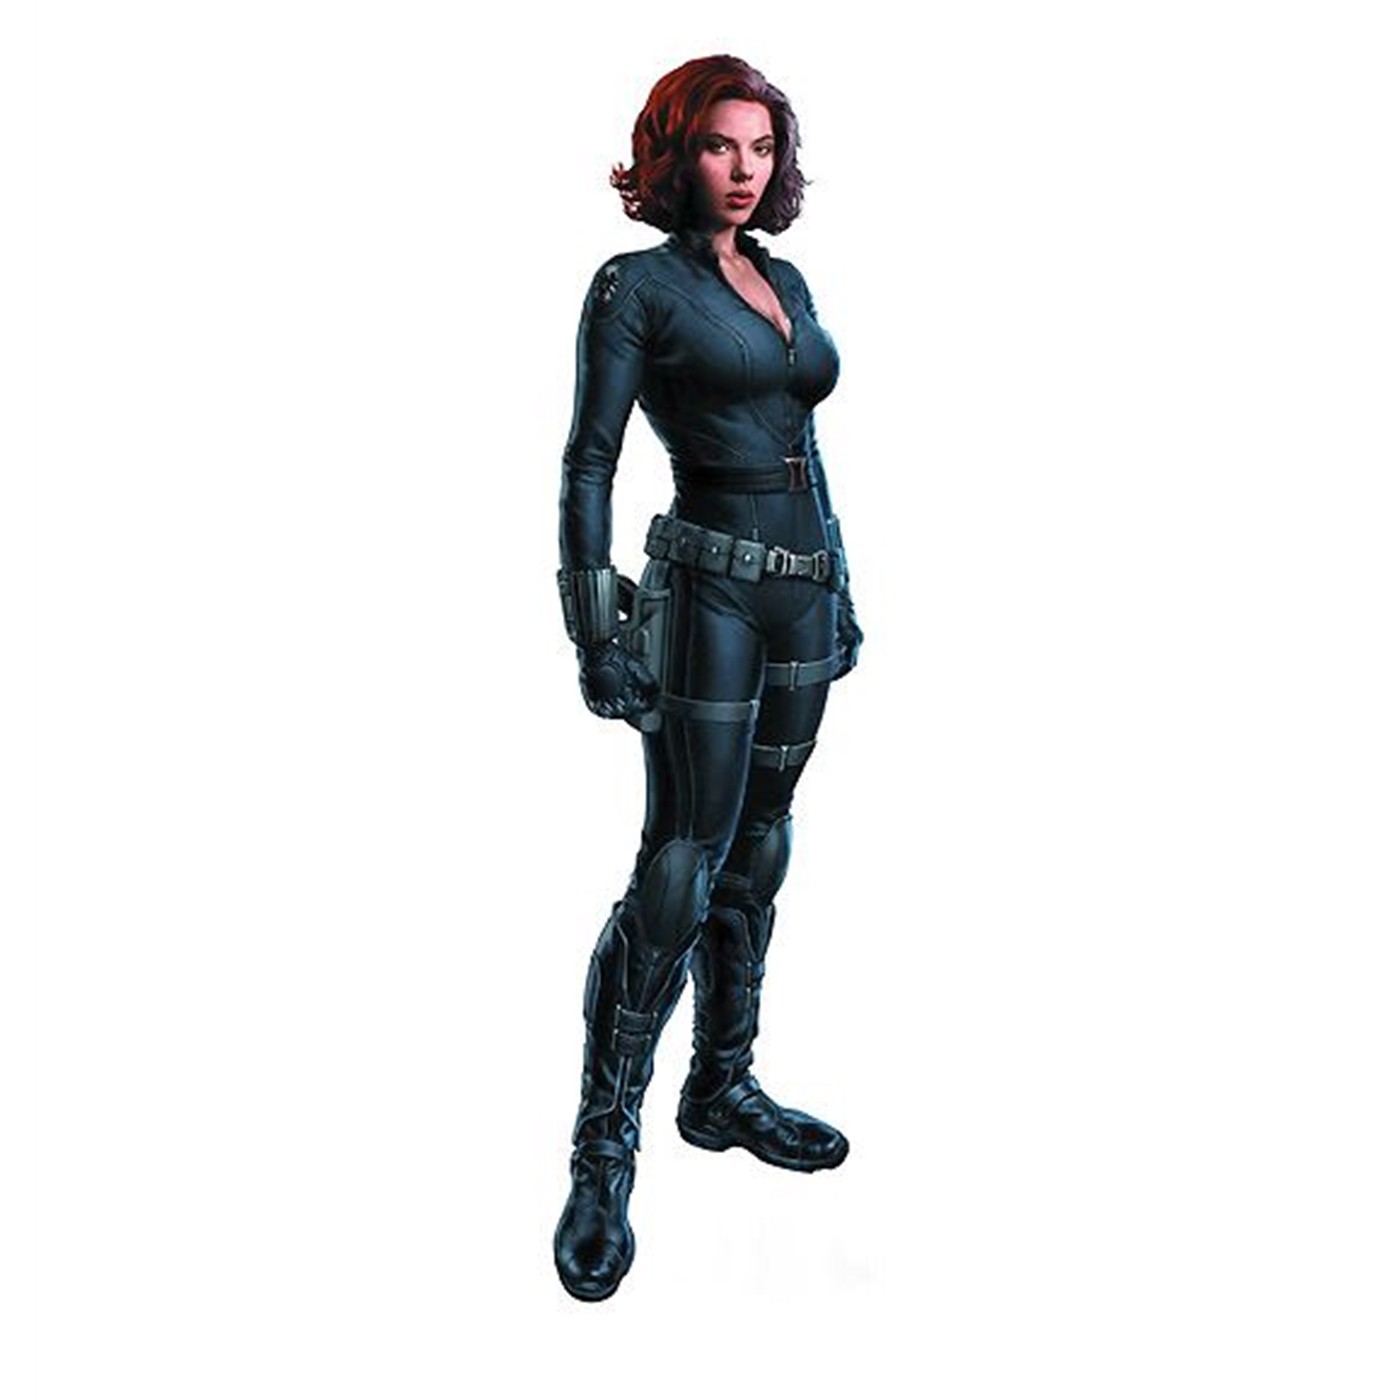 The Avengers Movie Black Widow Cardboard Standup